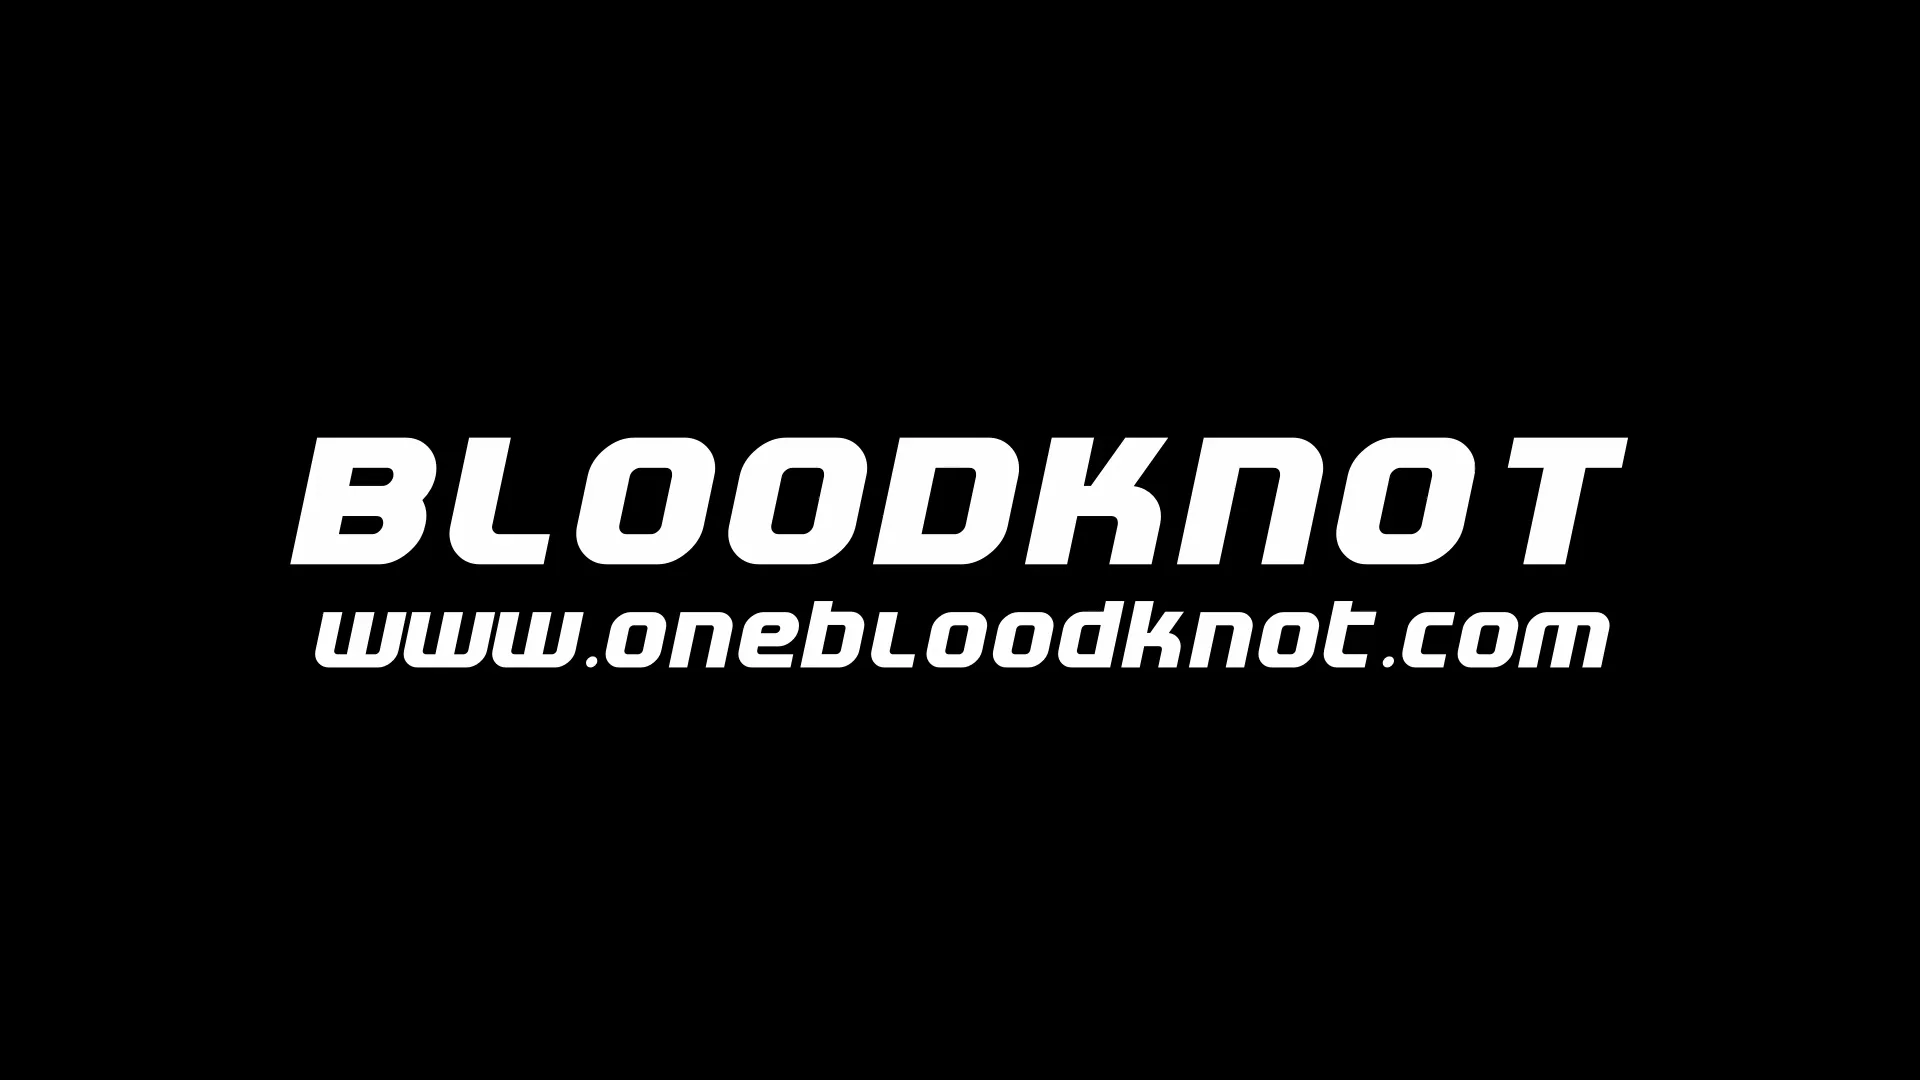 Bloodknot Tip-Ups on Vimeo